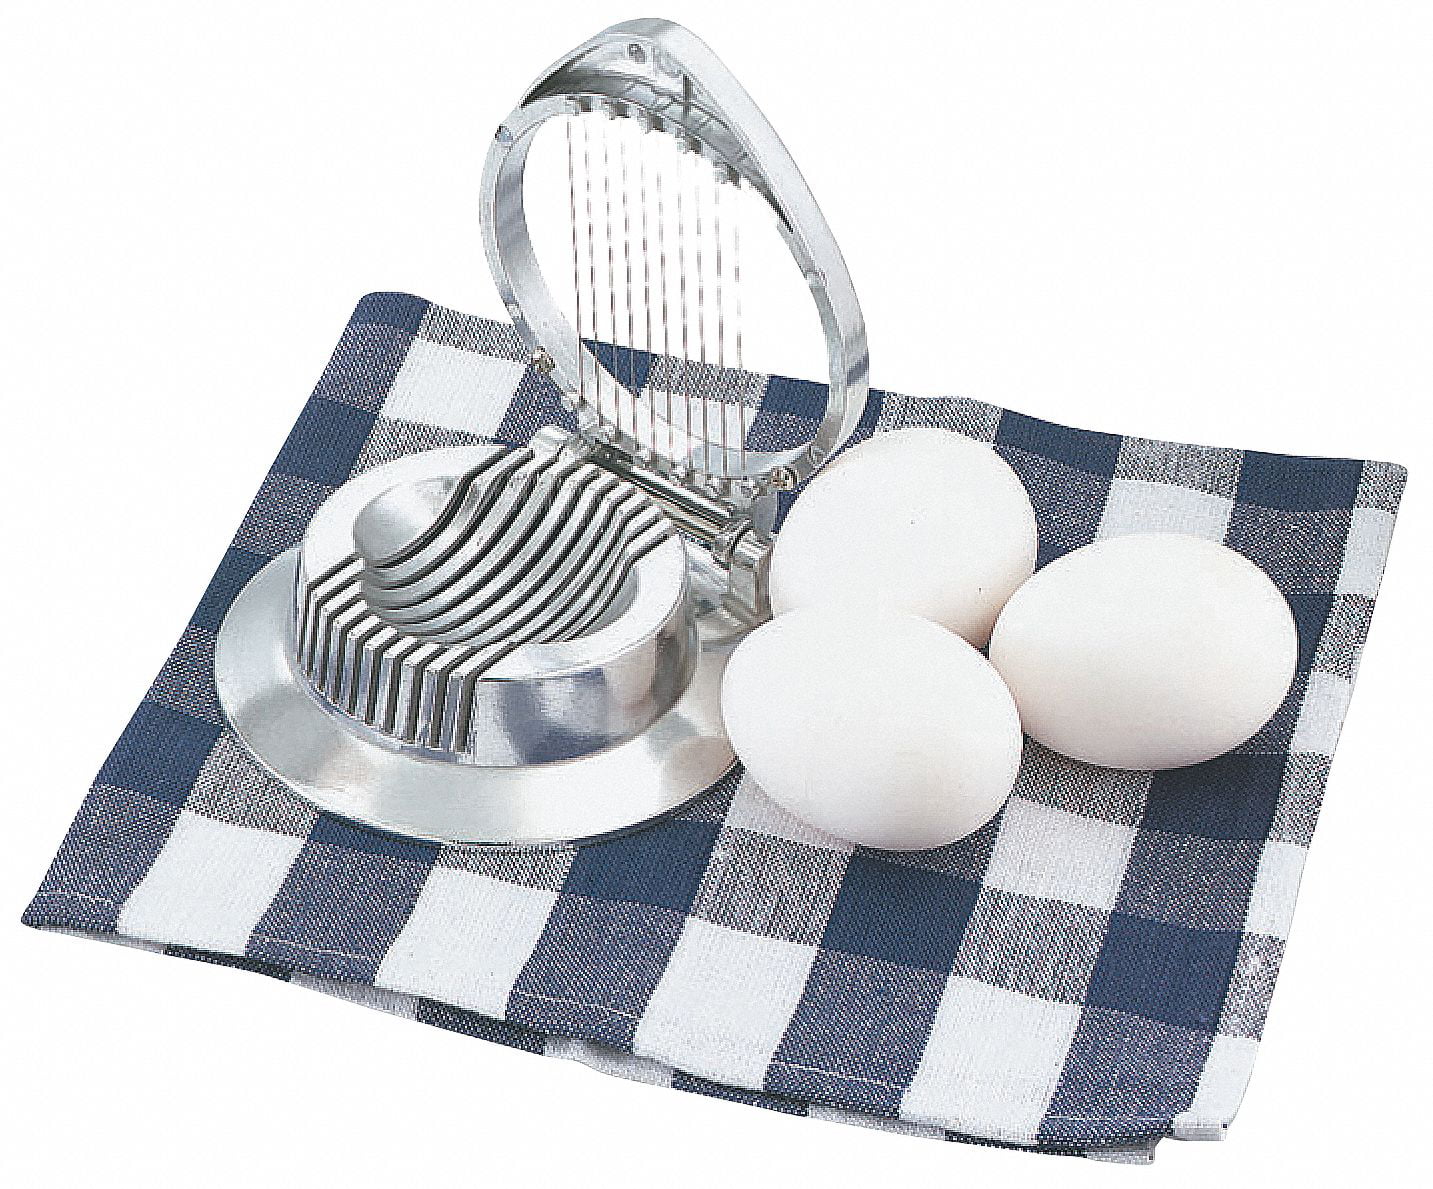 Totruning Egg Chopper for Hard Boiled Eggs - Egg Salad Choppers Stainless  Steel Egg Slicer - Manual Egg Dicer Kitchen Tool for Egg Salad (A)